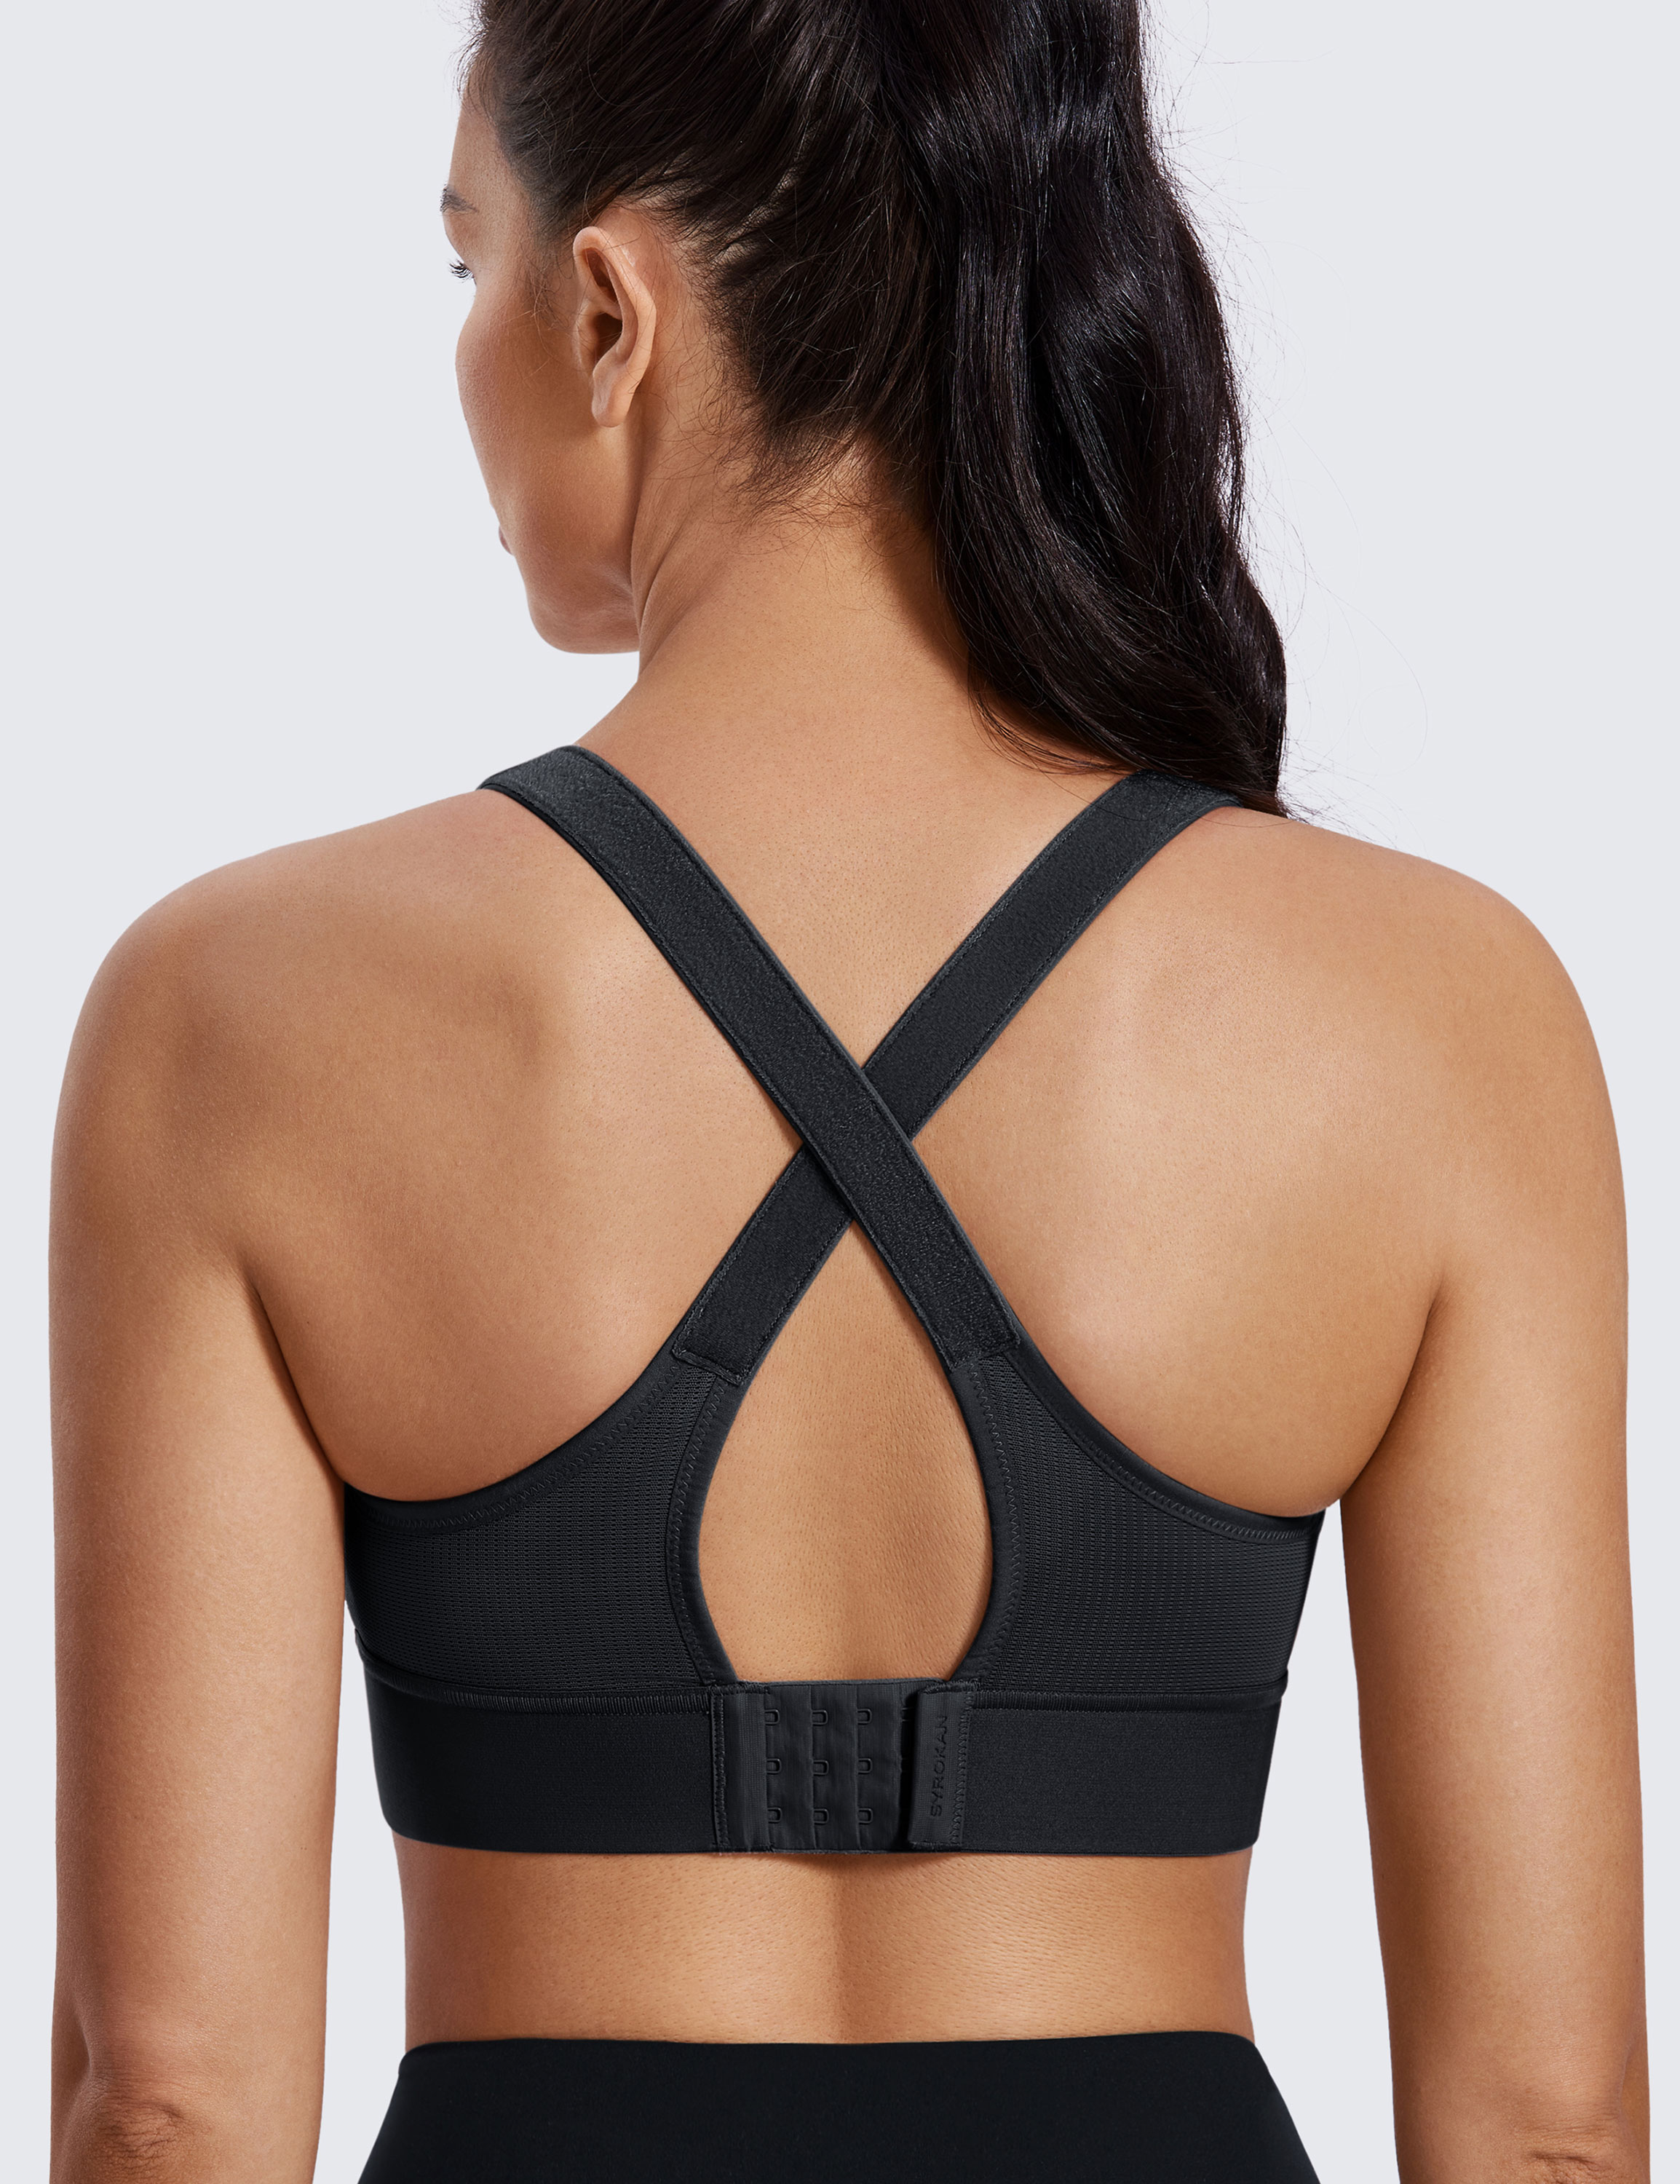 SYROKAN Women's High Impact Zipper Front Non-padded Wire Free X Back Sports  Bra